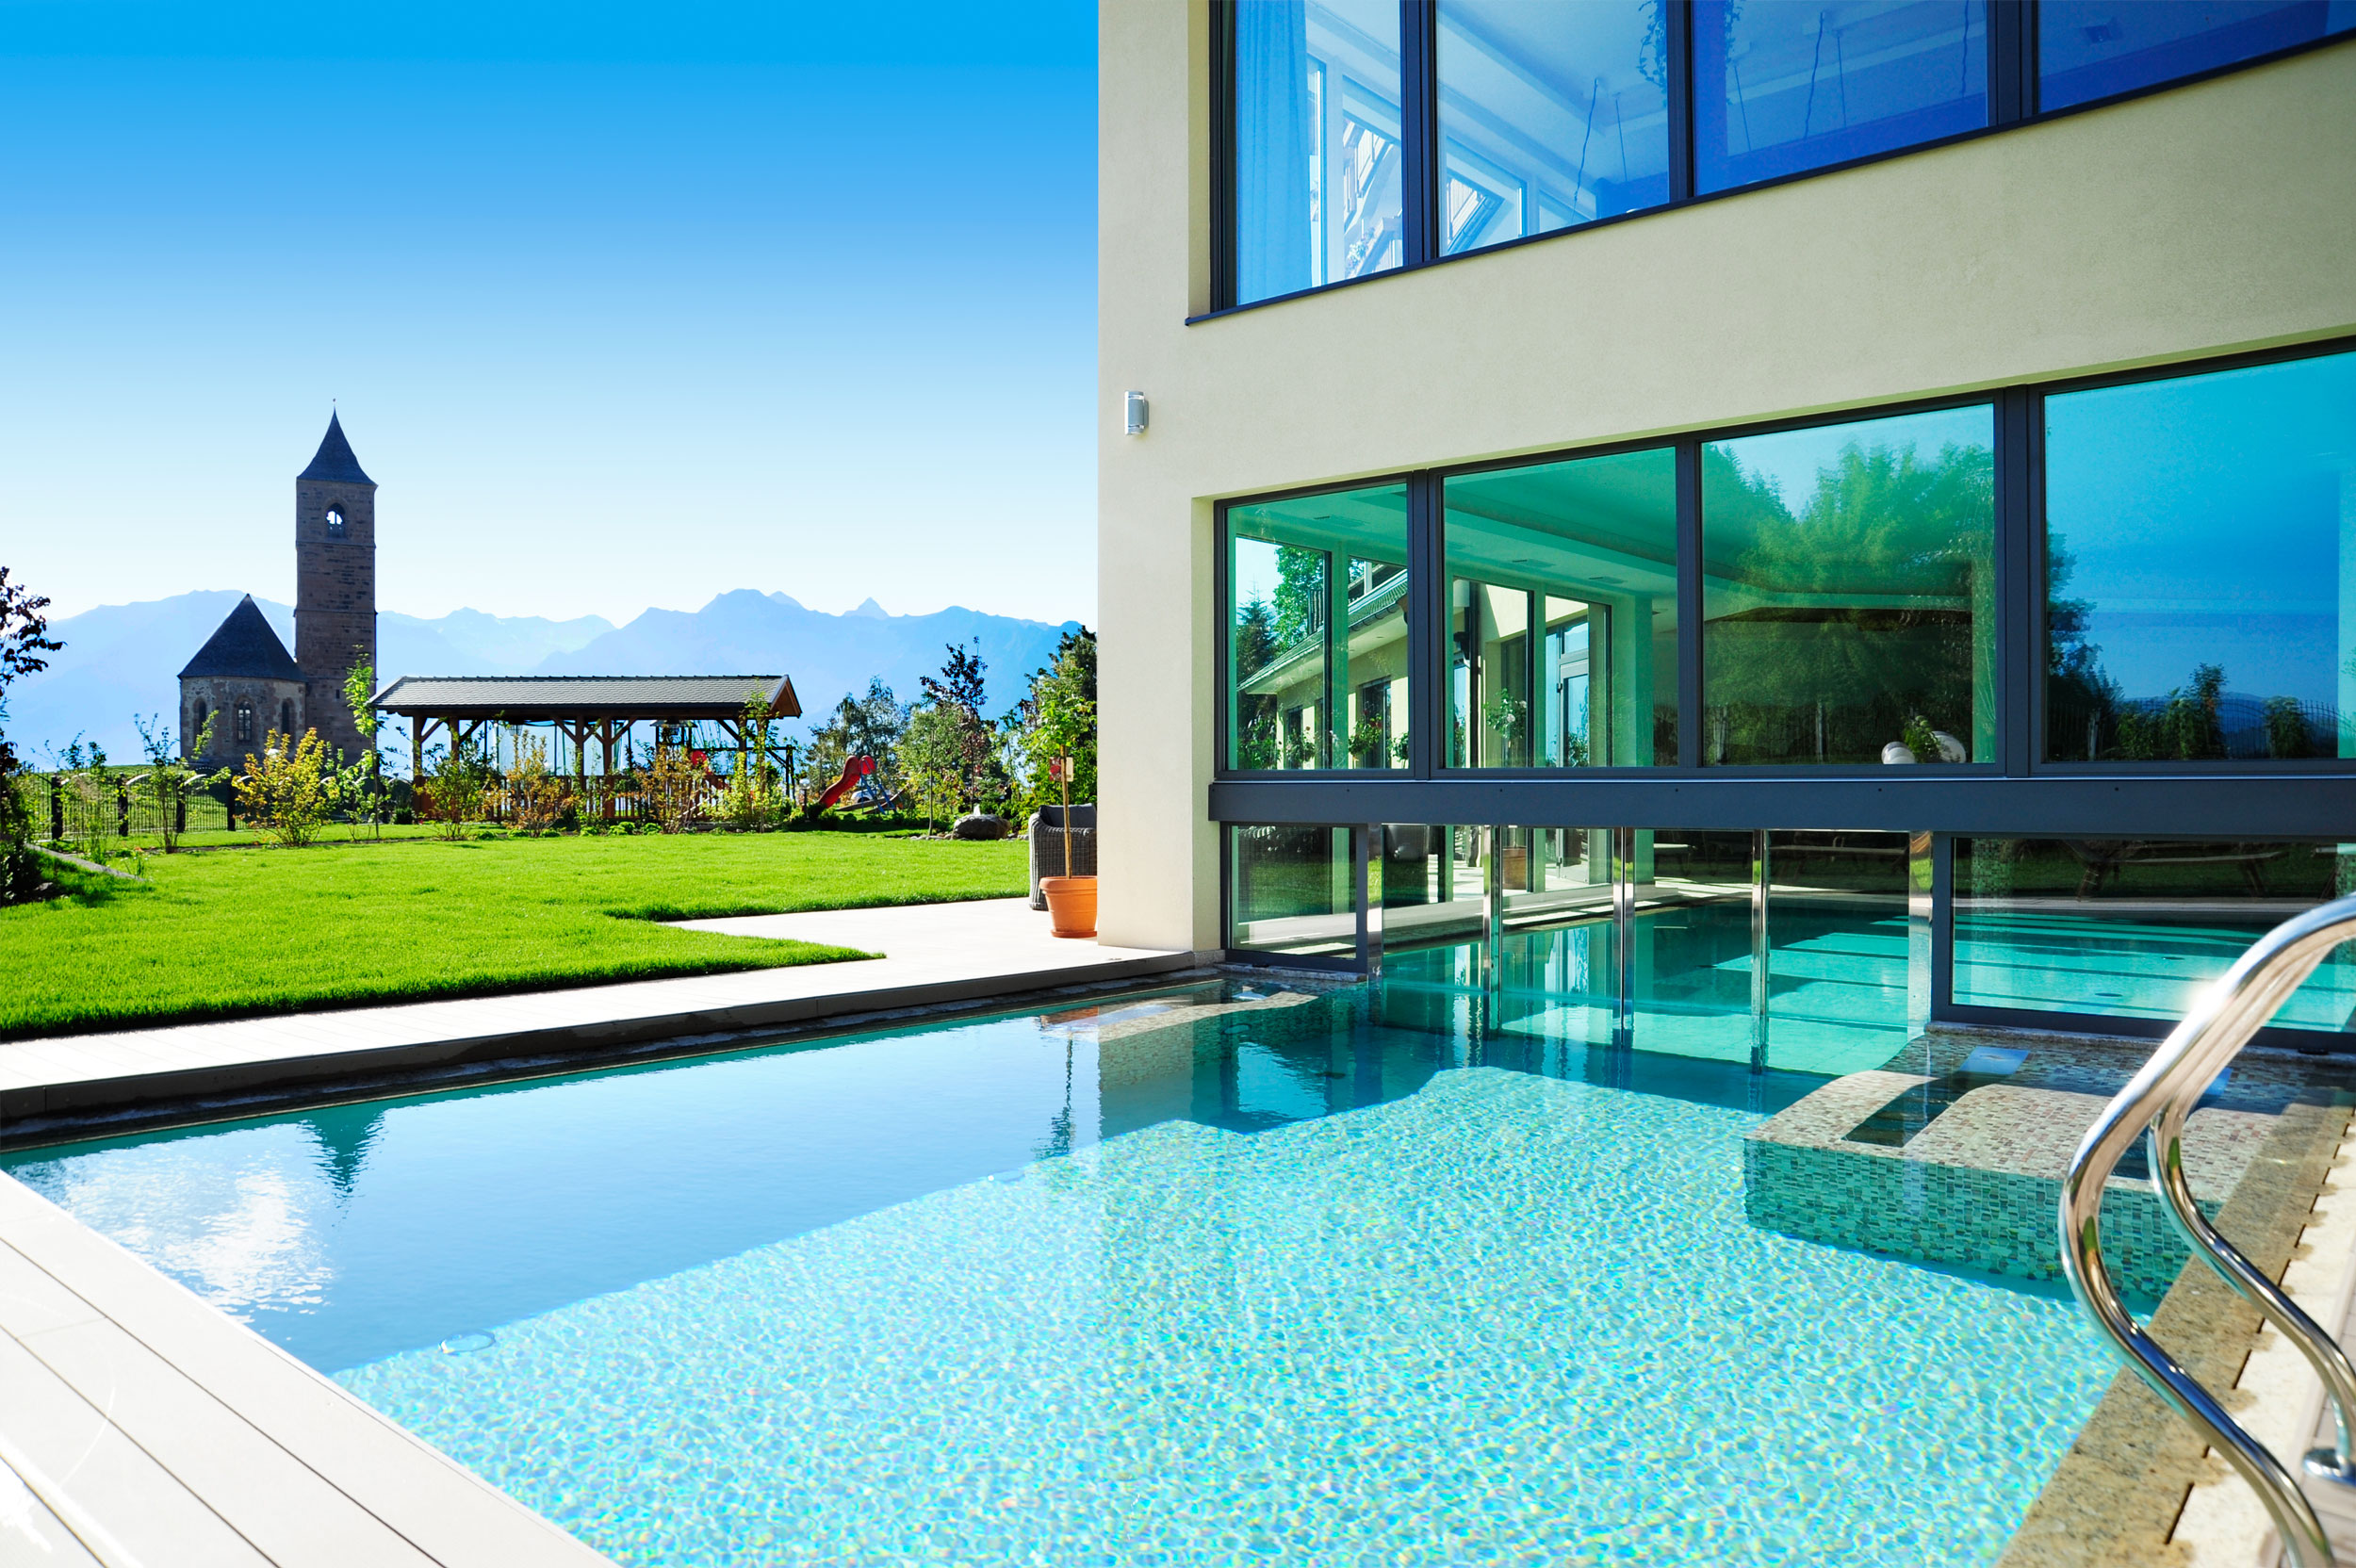 Hotel Südtirol Pool mit Liegewiese | Hotel Alto Adige Piscina con prato per prendere il sole | Hotel South Tyrol pool with sunbathing lawn